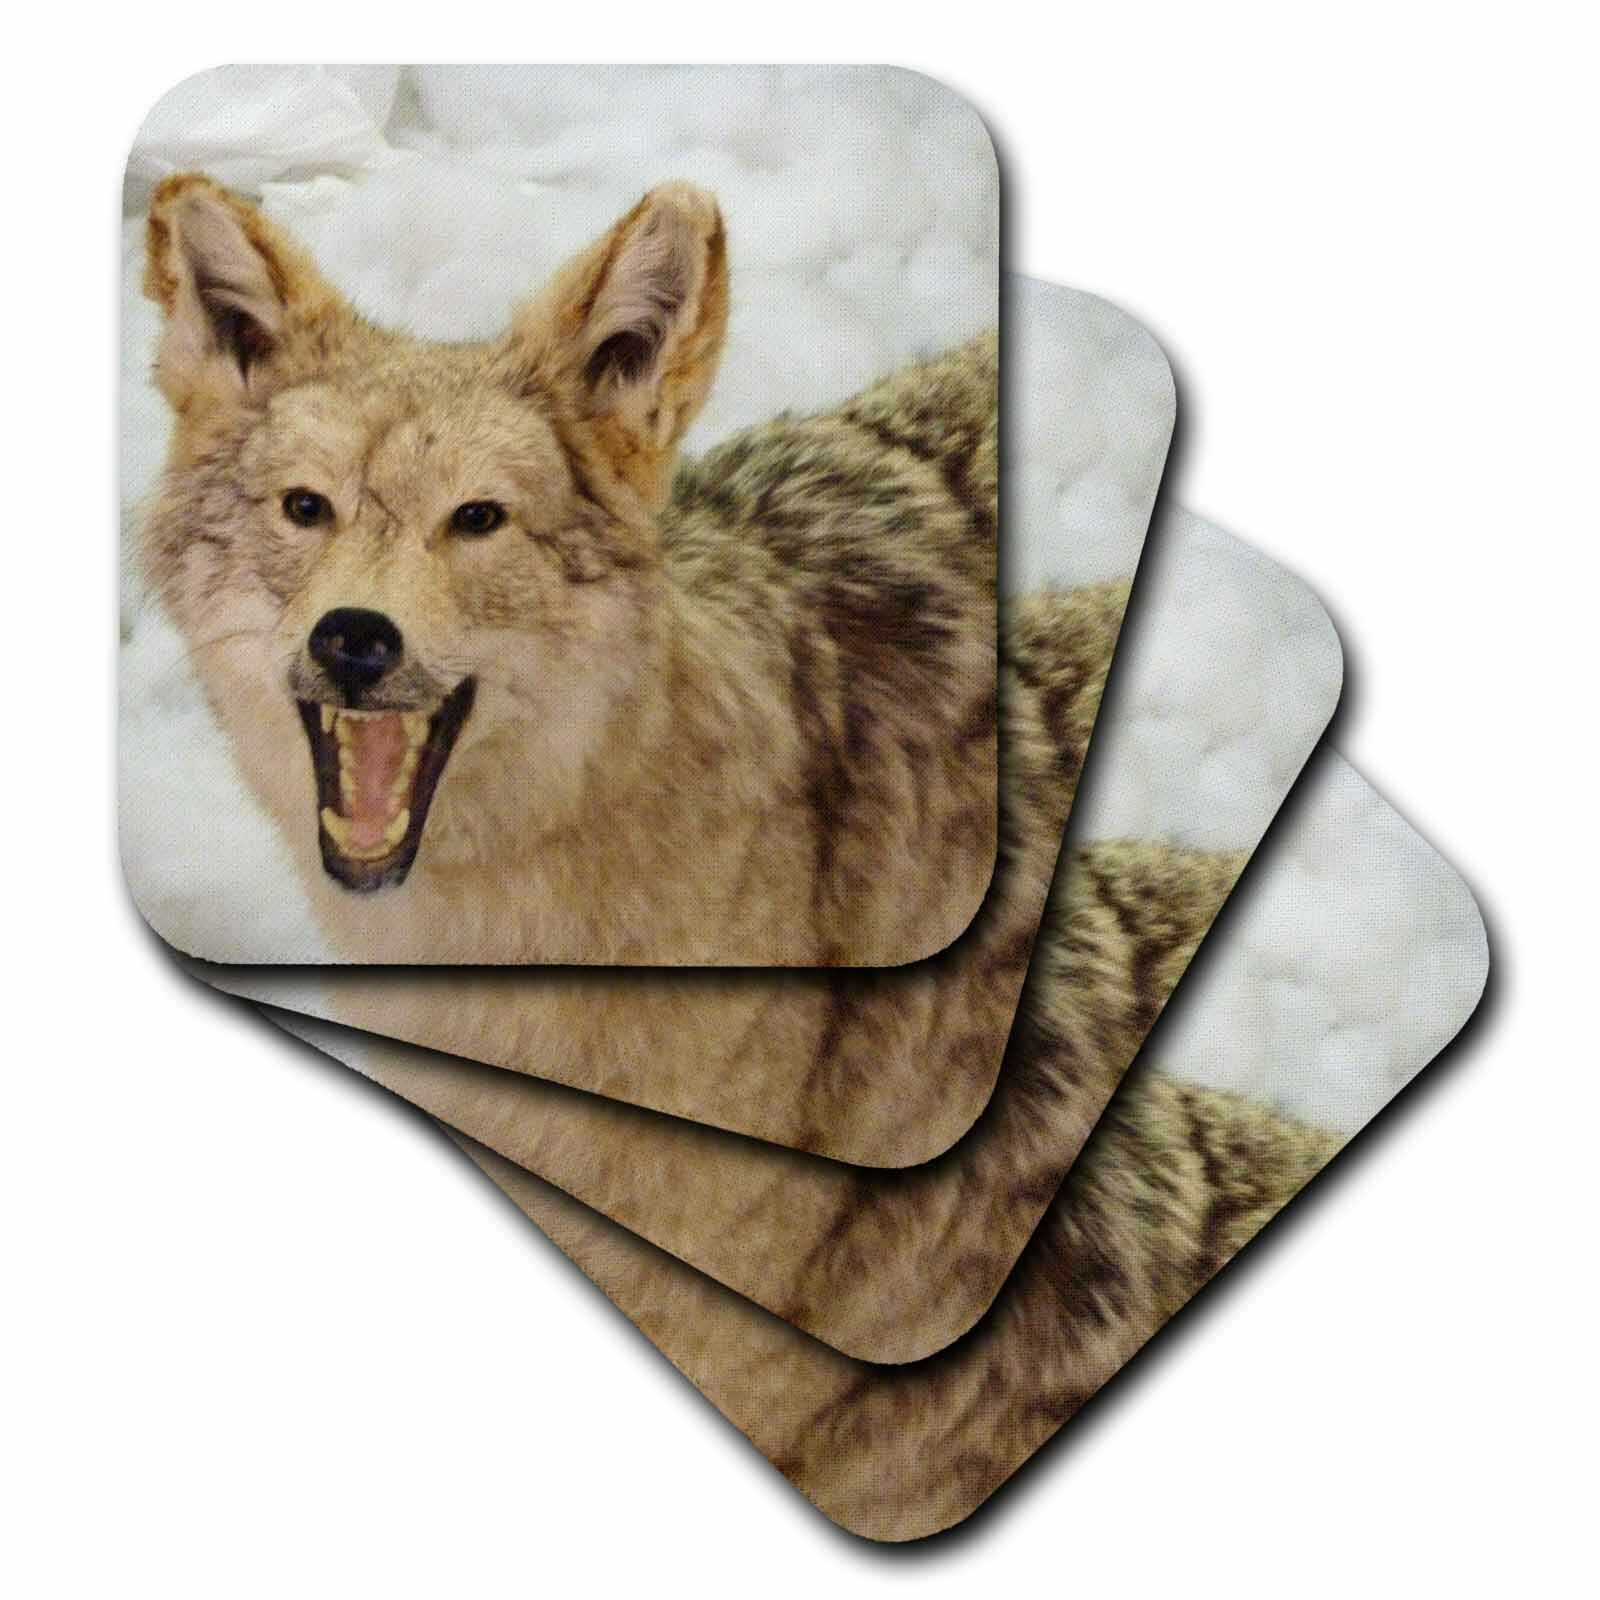 Set of 4 3dRose cst_51794_3 A Closeup of a Wolf Ceramic Tile Coasters 